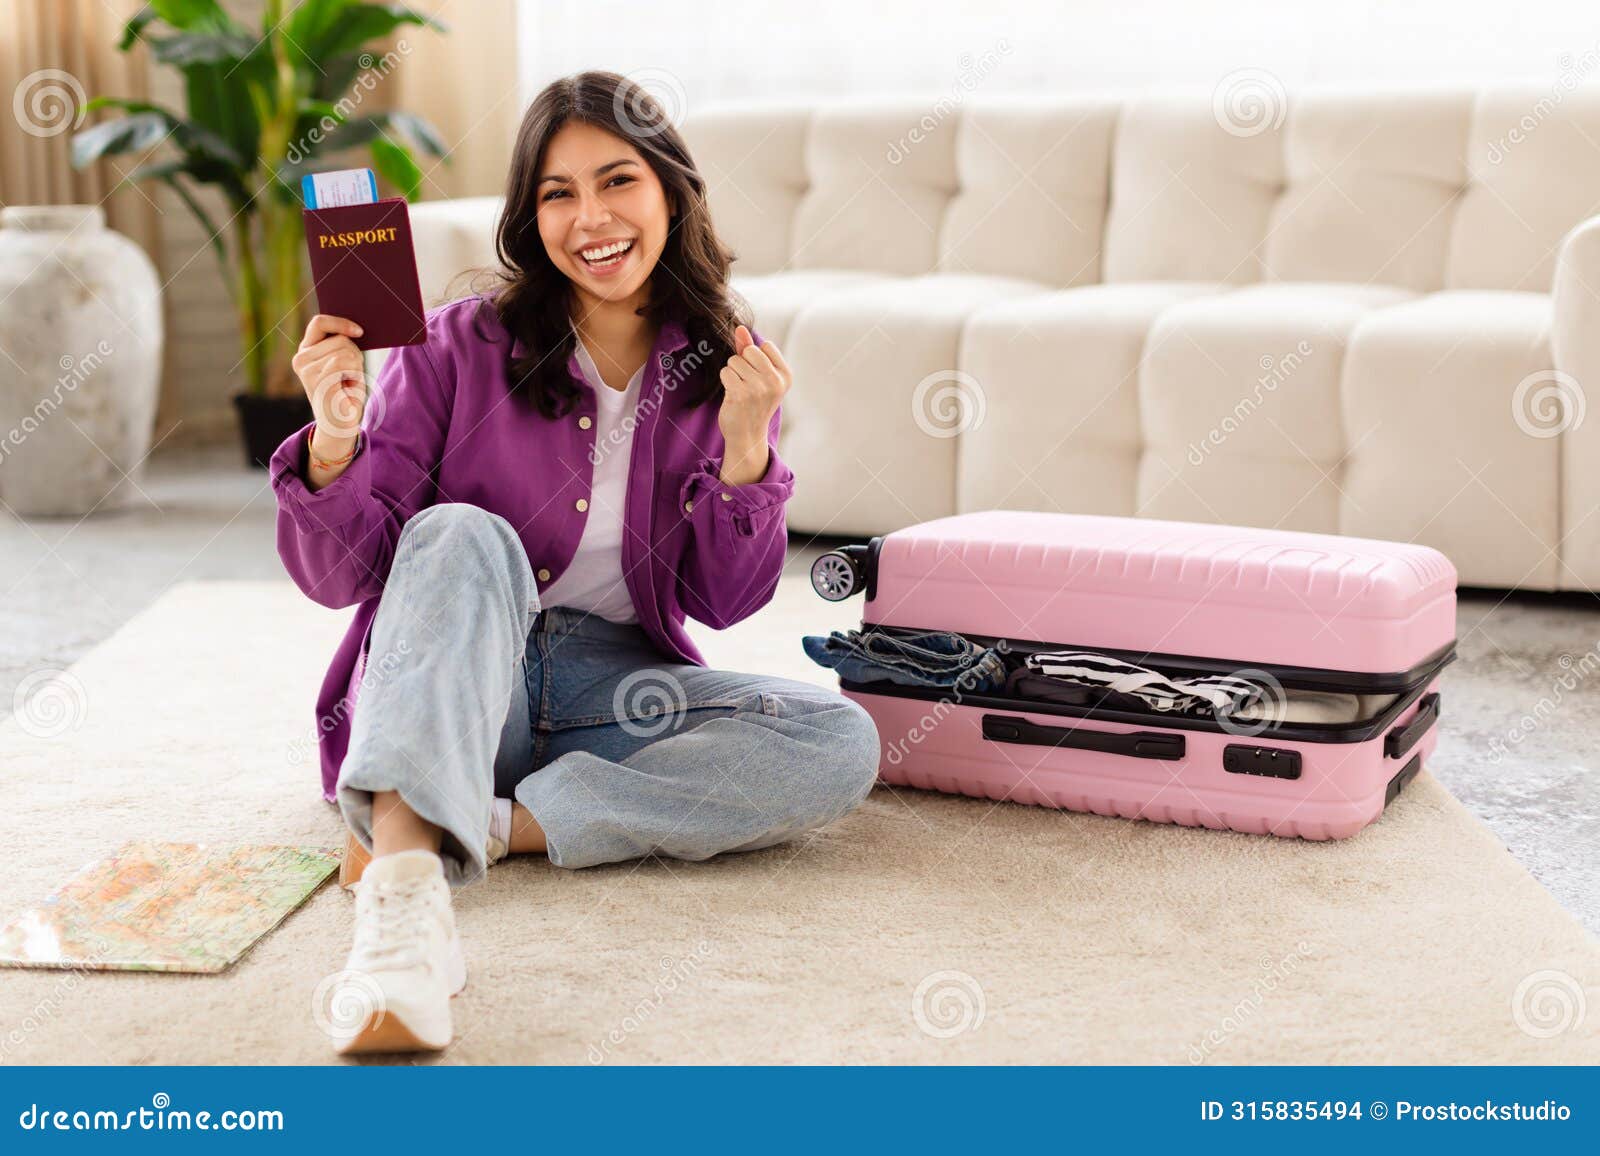 joyful woman holding passport with suitcase closed